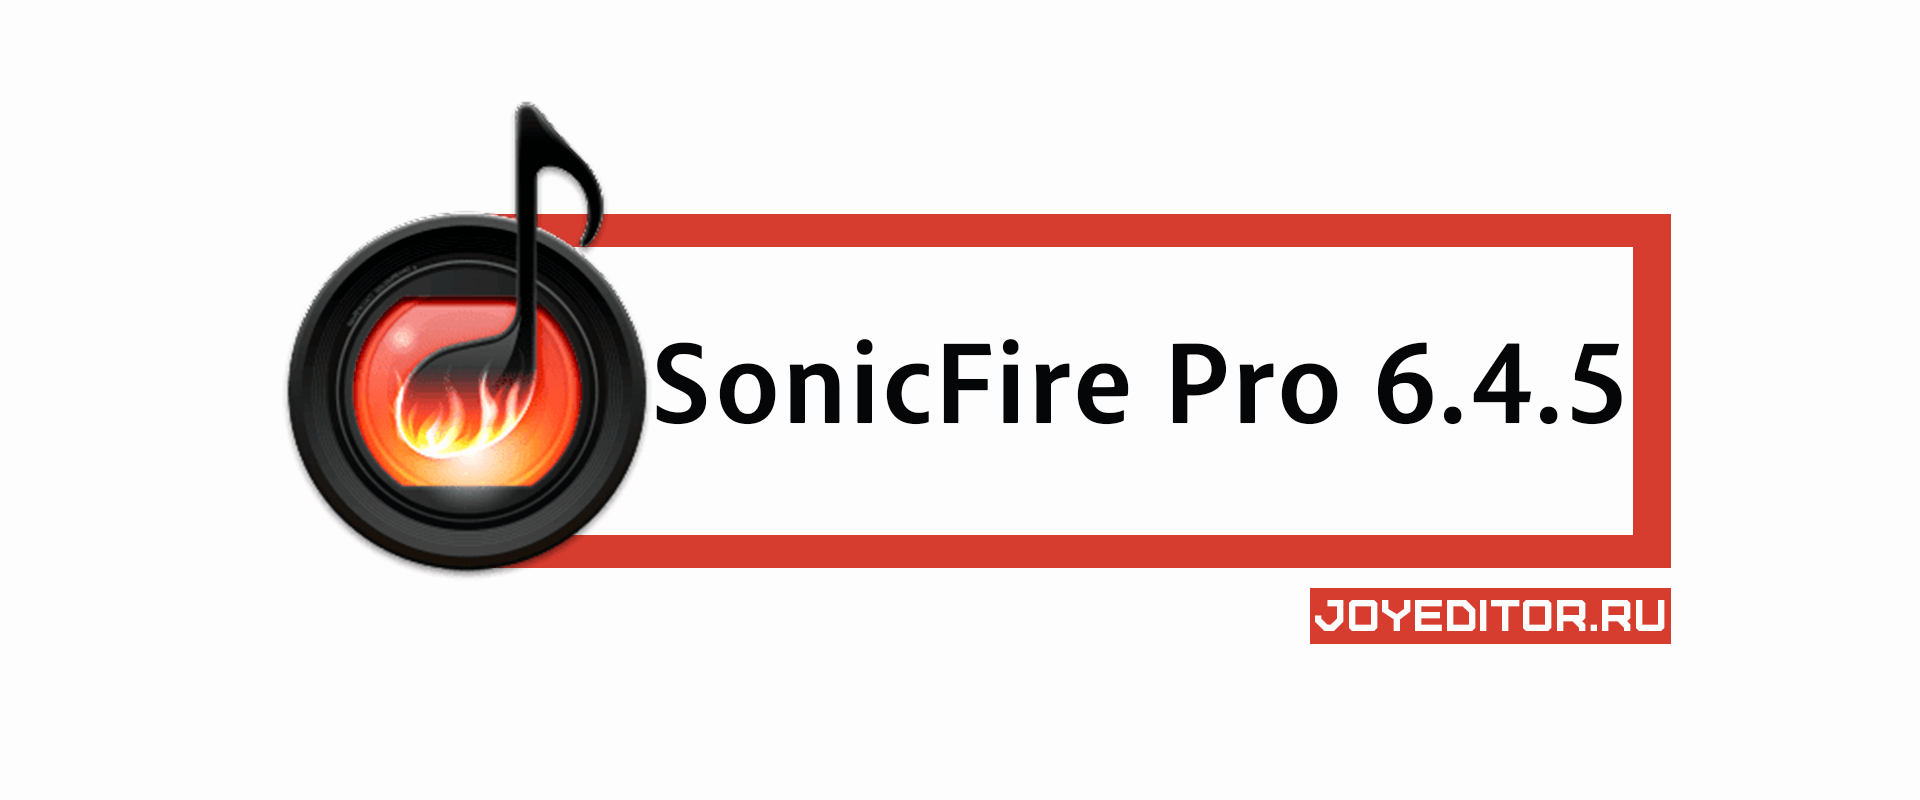 SonicFire Pro 6.4.5